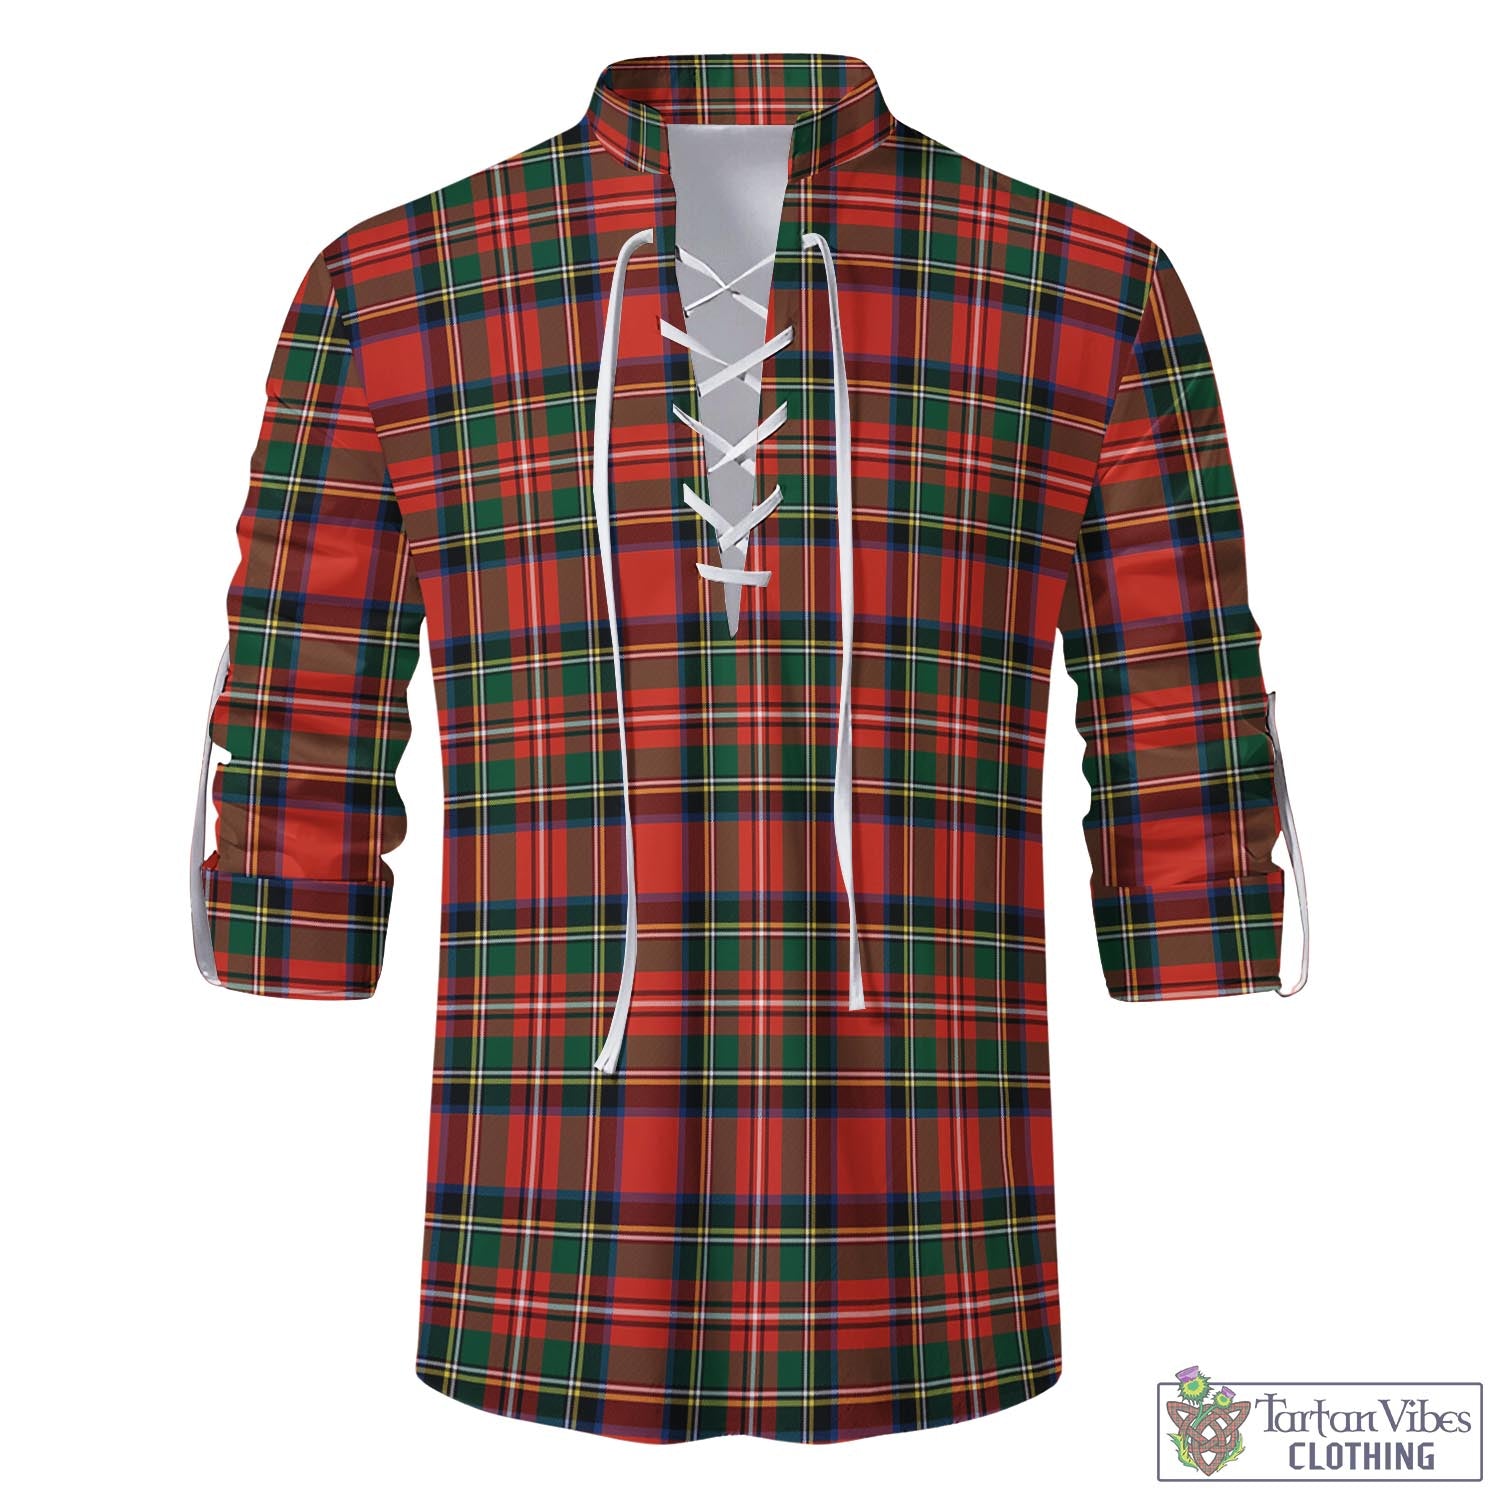 Tartan Vibes Clothing Lyle Tartan Men's Scottish Traditional Jacobite Ghillie Kilt Shirt